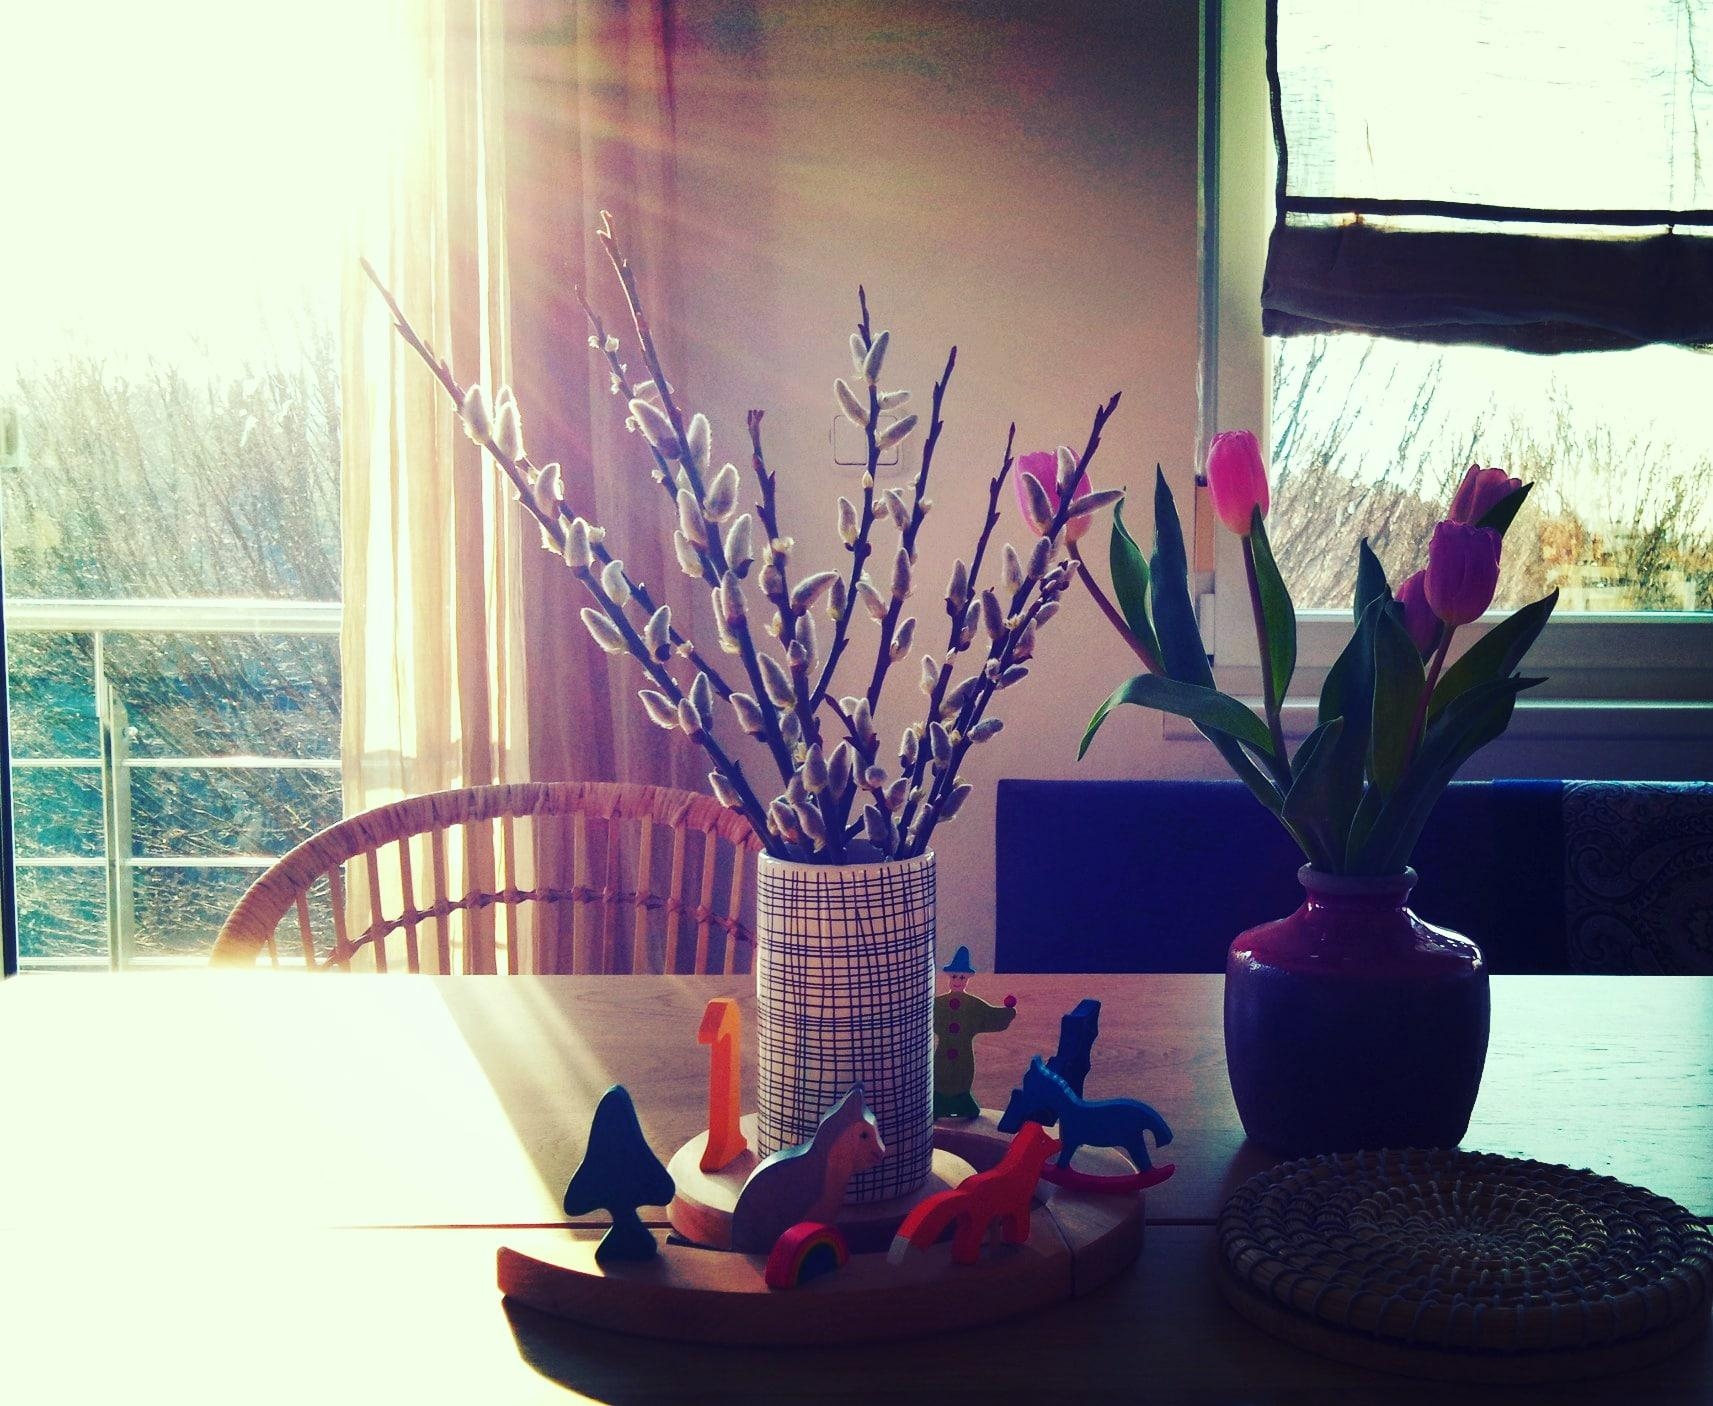 Frühling im Haus 🌷☀️💚
#sonne #grimmwoodentoys #tulpen